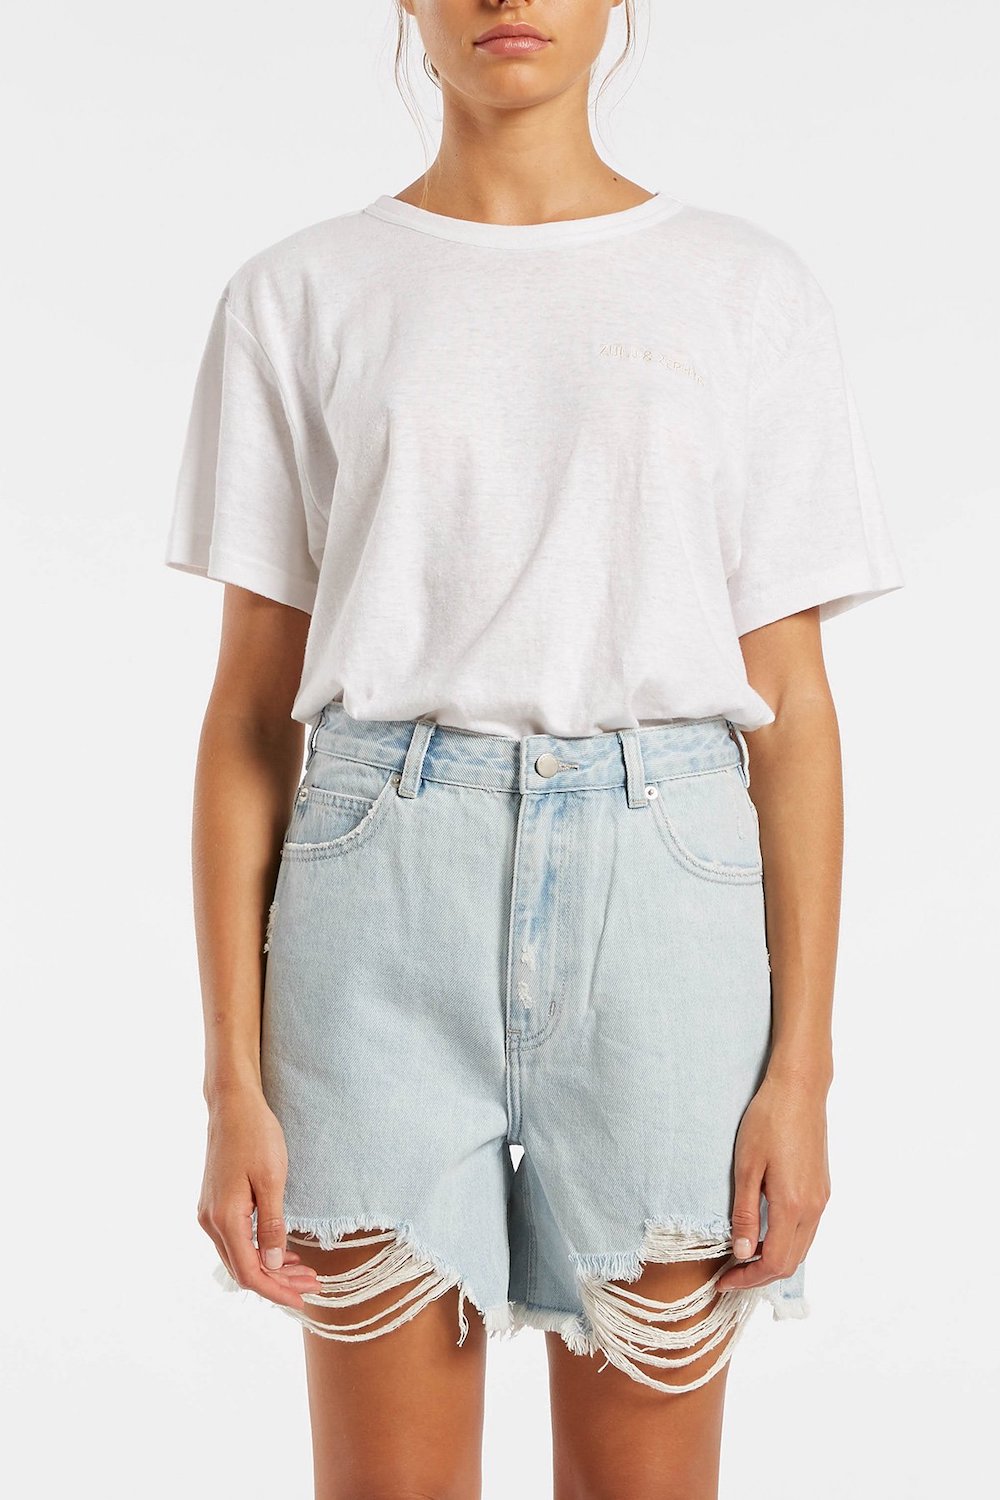 the best cutoff denim jean shorts of summer 2020